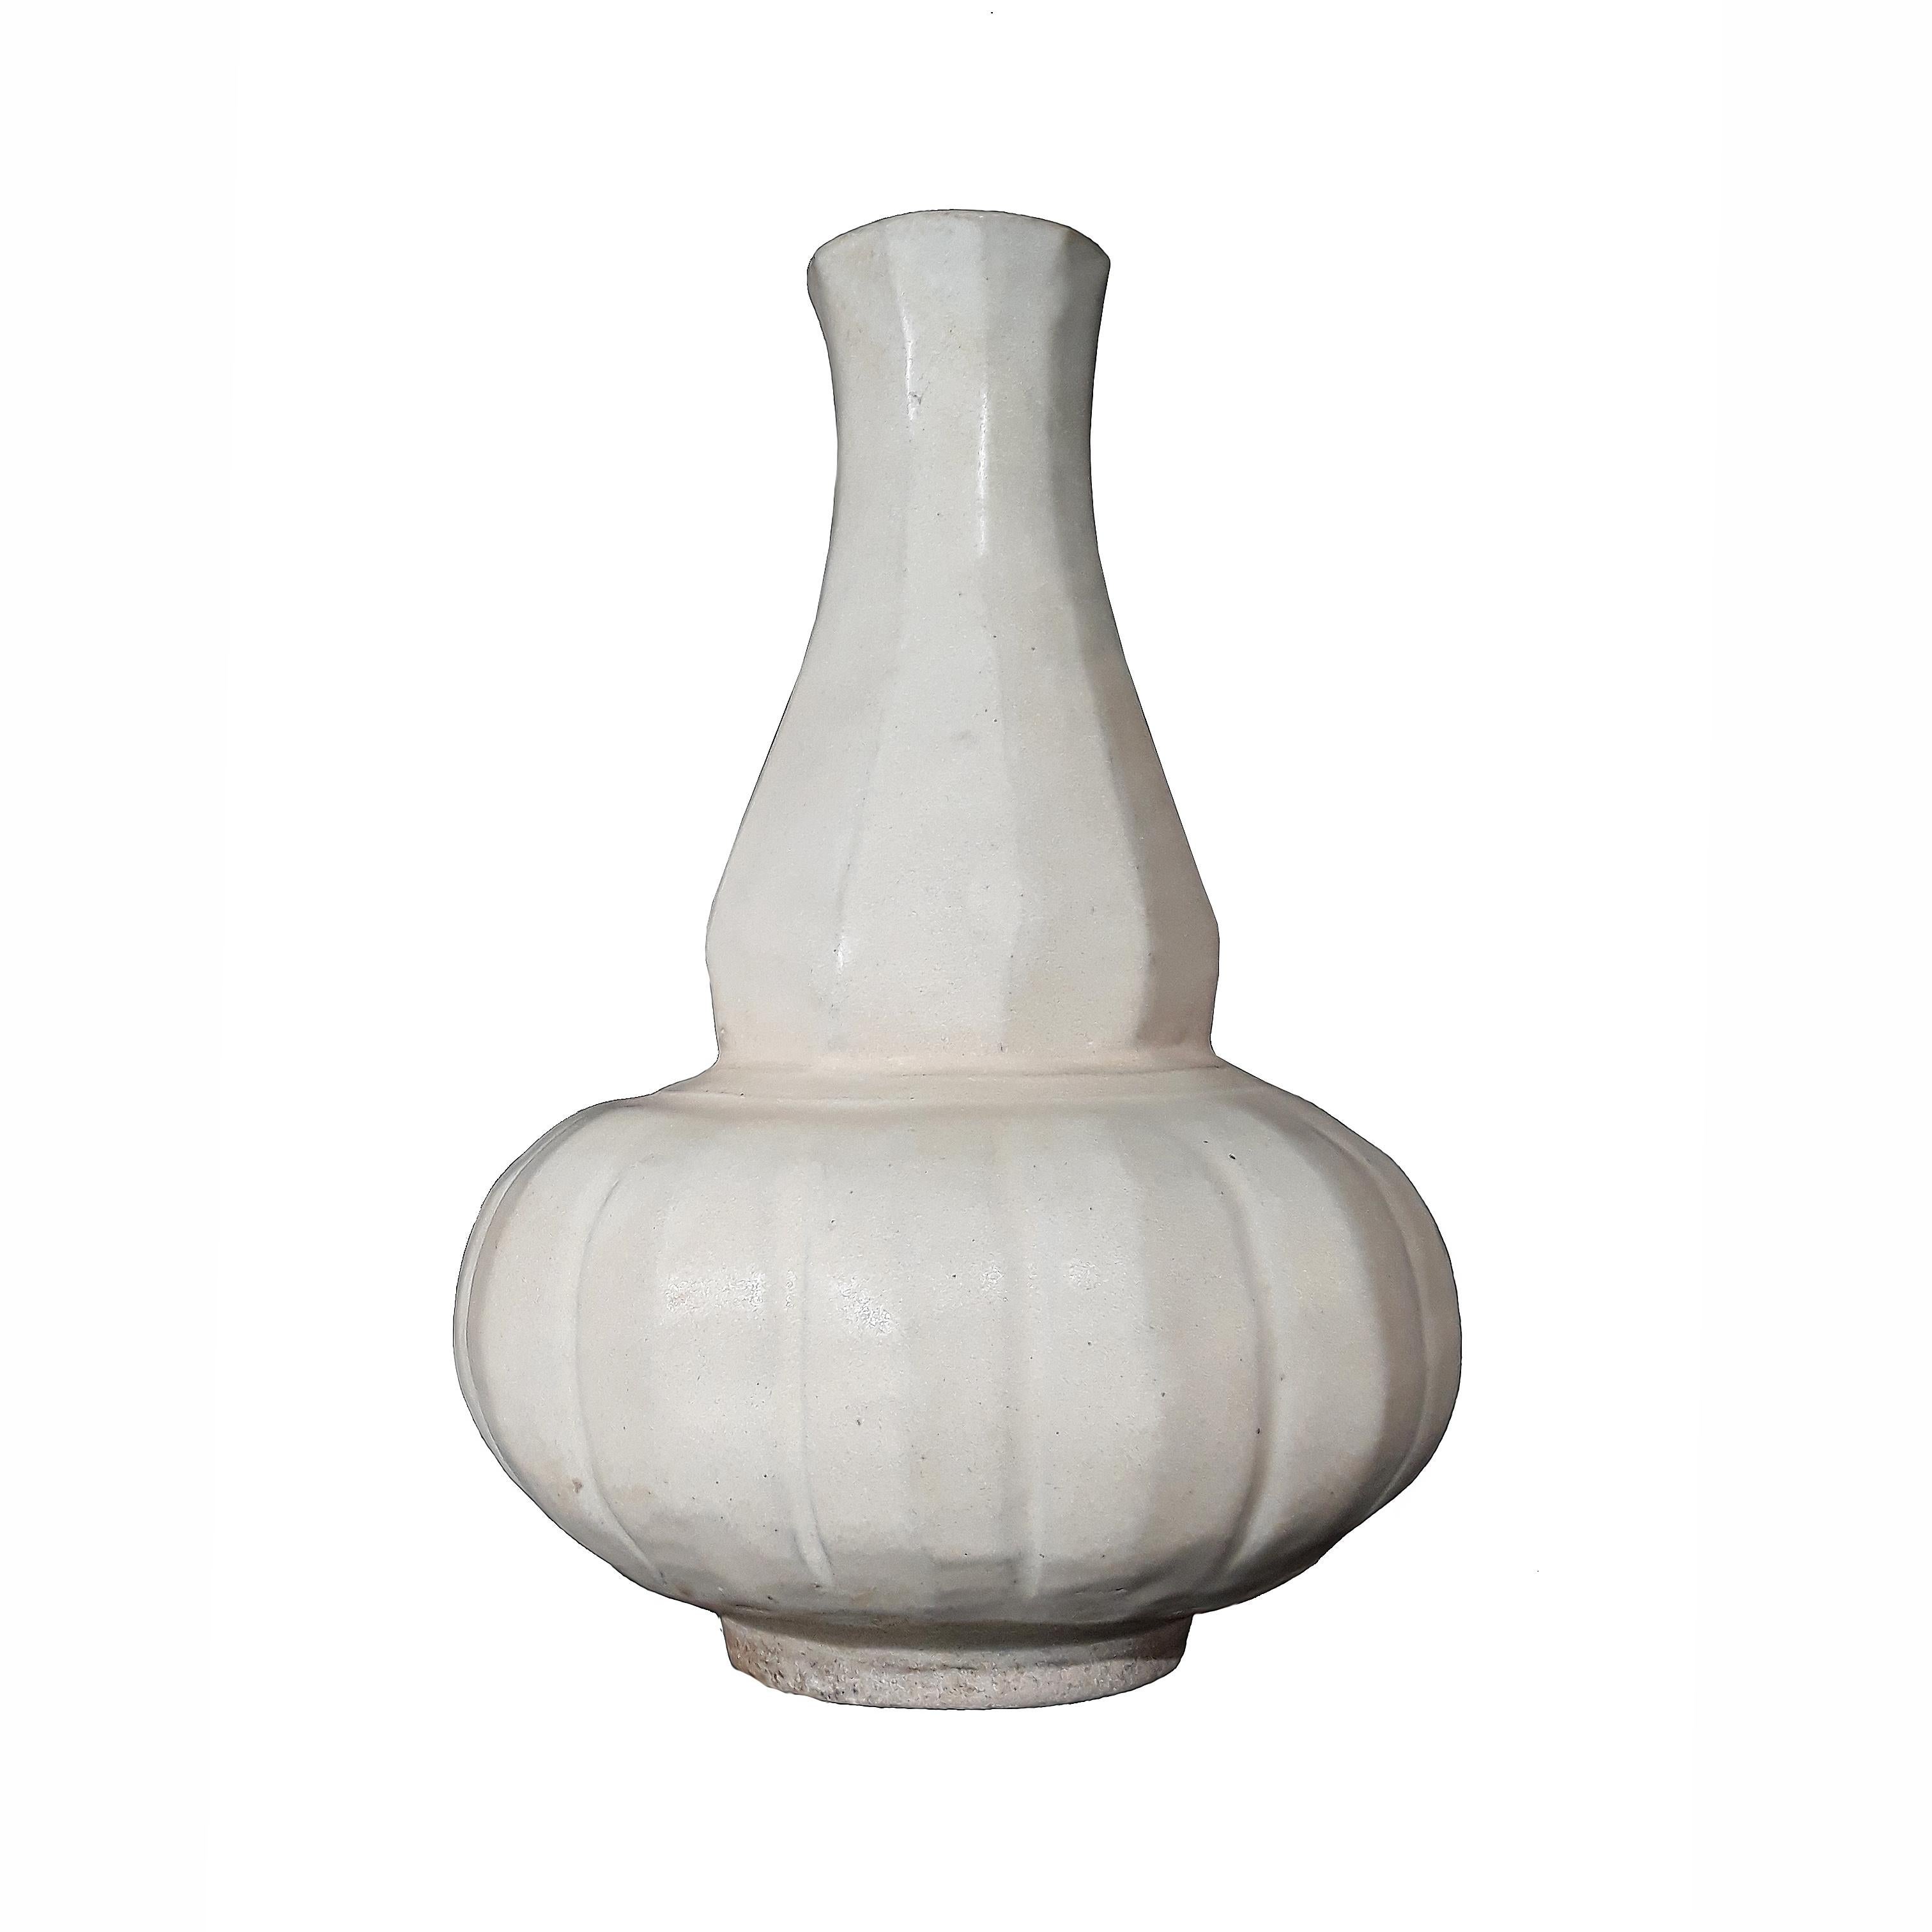 Glazed Thai Ceramic Vase, Early 20th Century